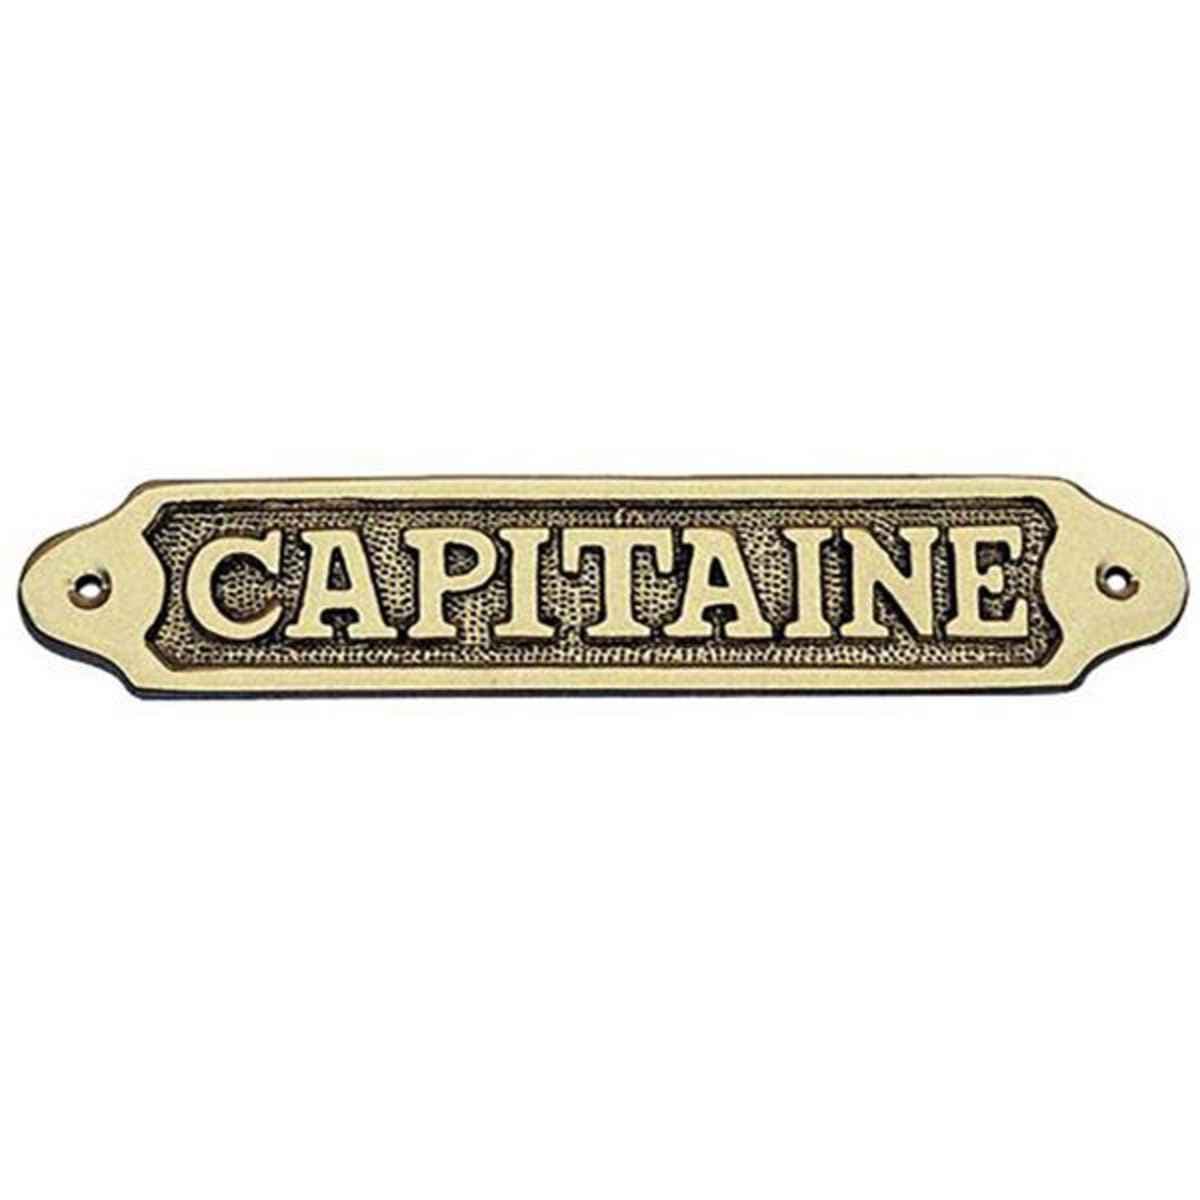 Türschild "Capitaine", 19x3.5cm